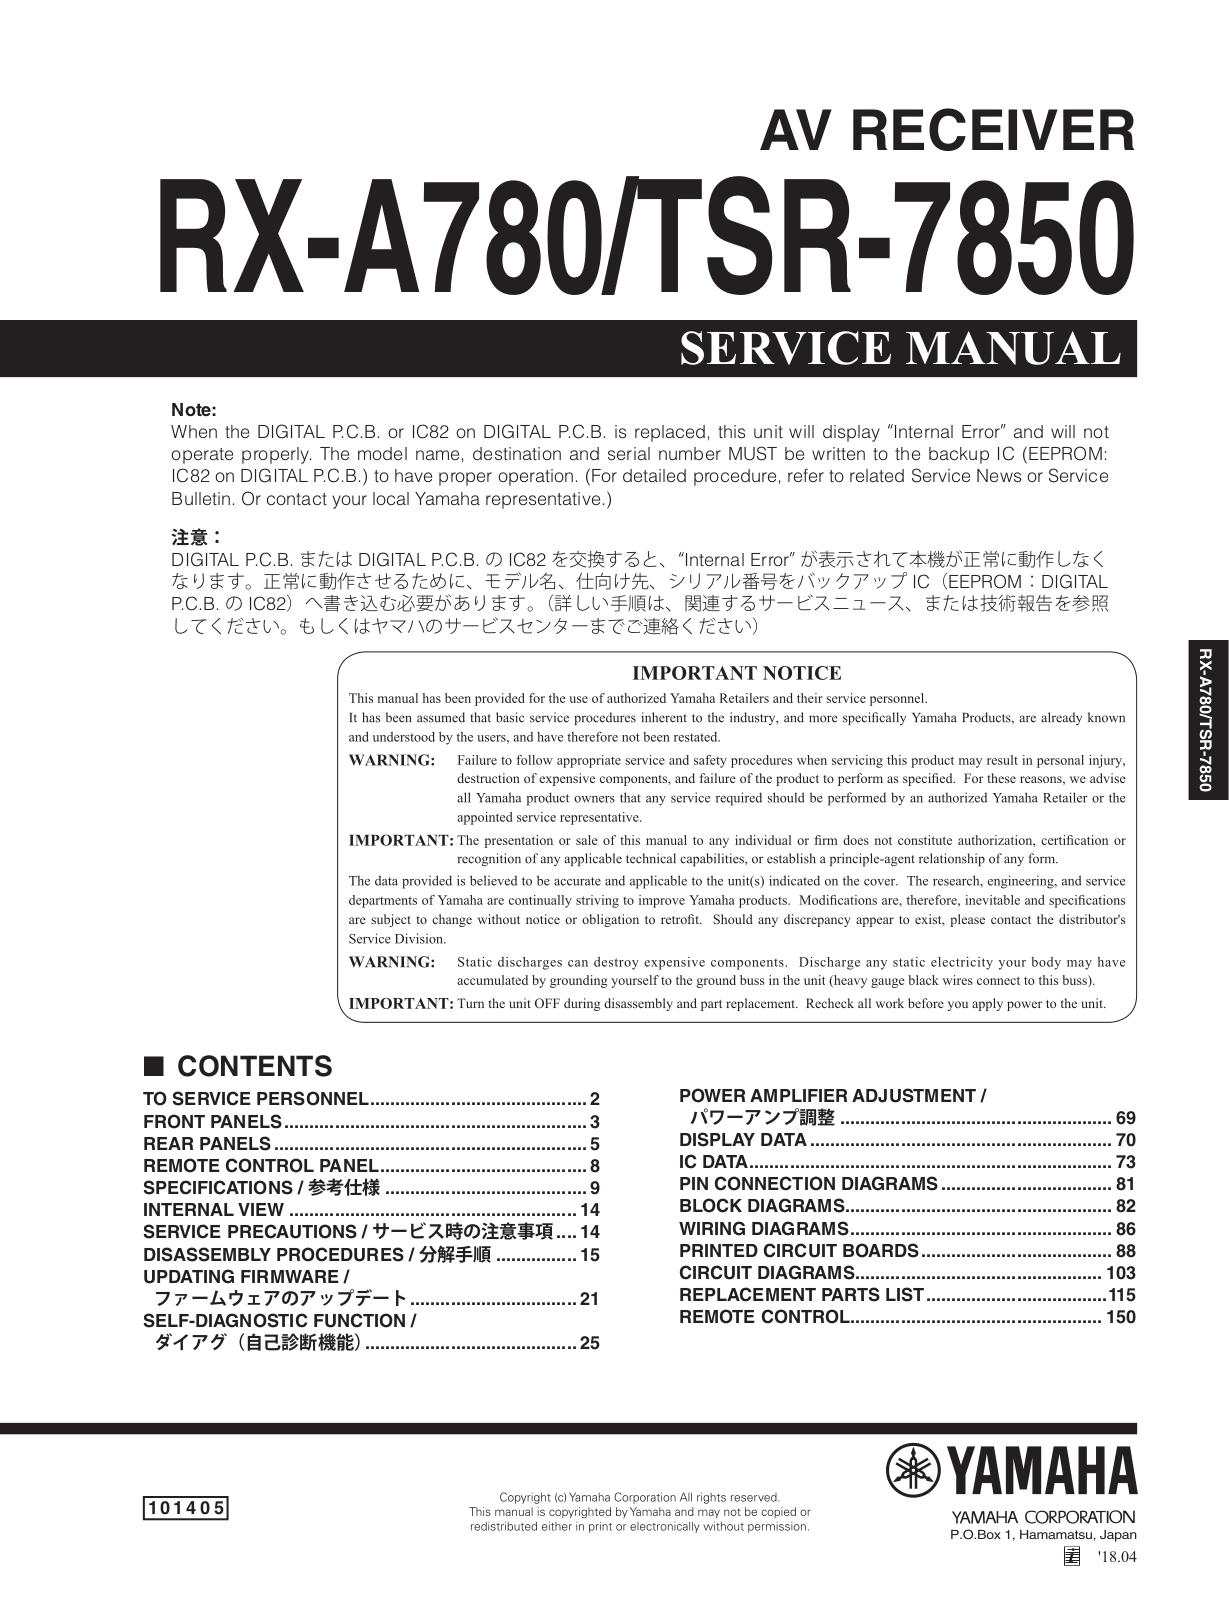 Yamaha RX-A780, TSR-7850 Service manual